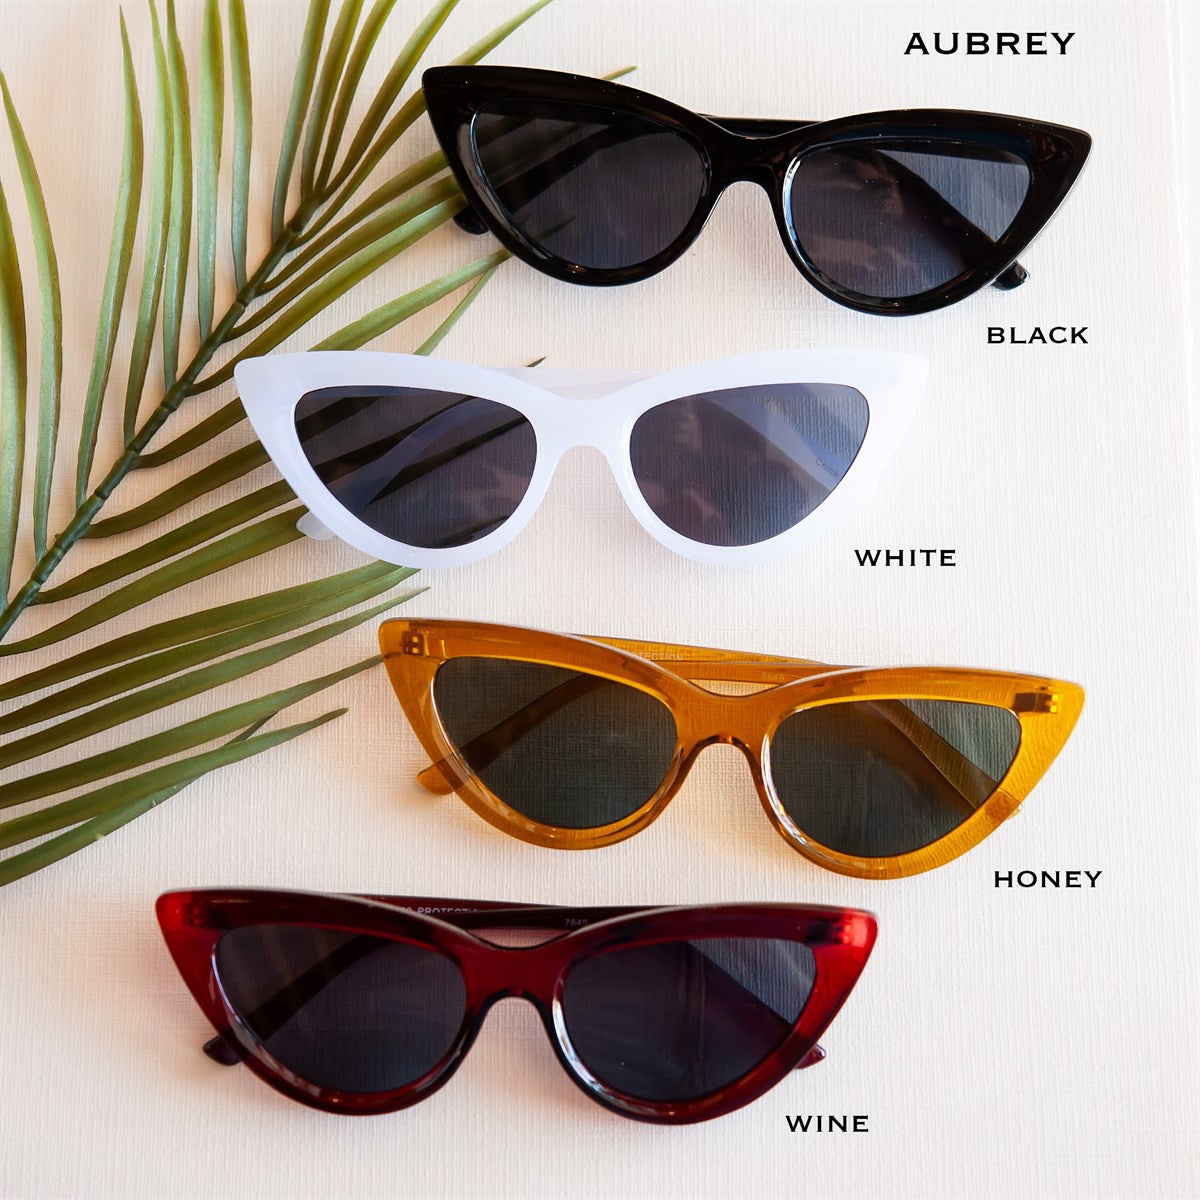 Aubrey Small Cat Eye Sunglasses | Retro Acetate Sunnies | Hollywood Vibes Sunglasses